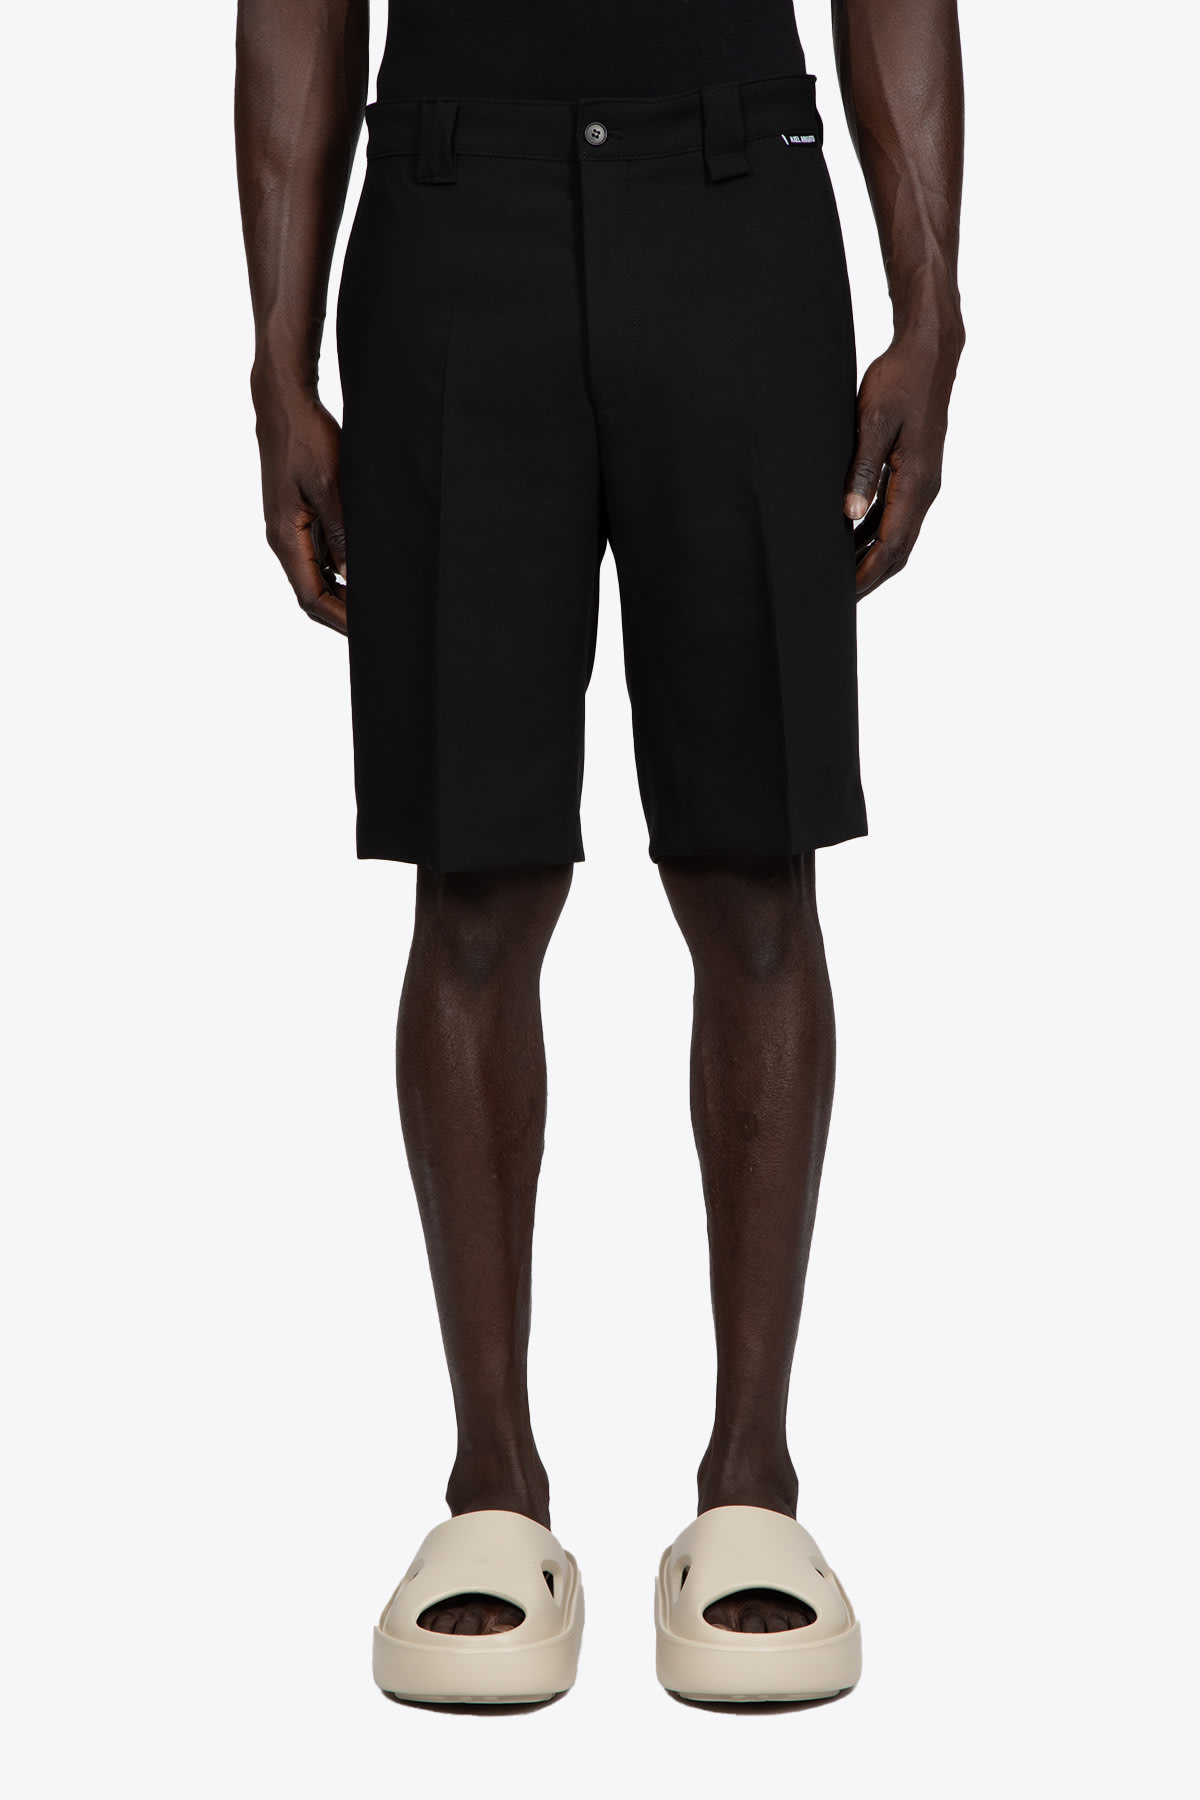 Axel Arigato Grit Shorts Black tailored bermuda shorts - Grit shorts